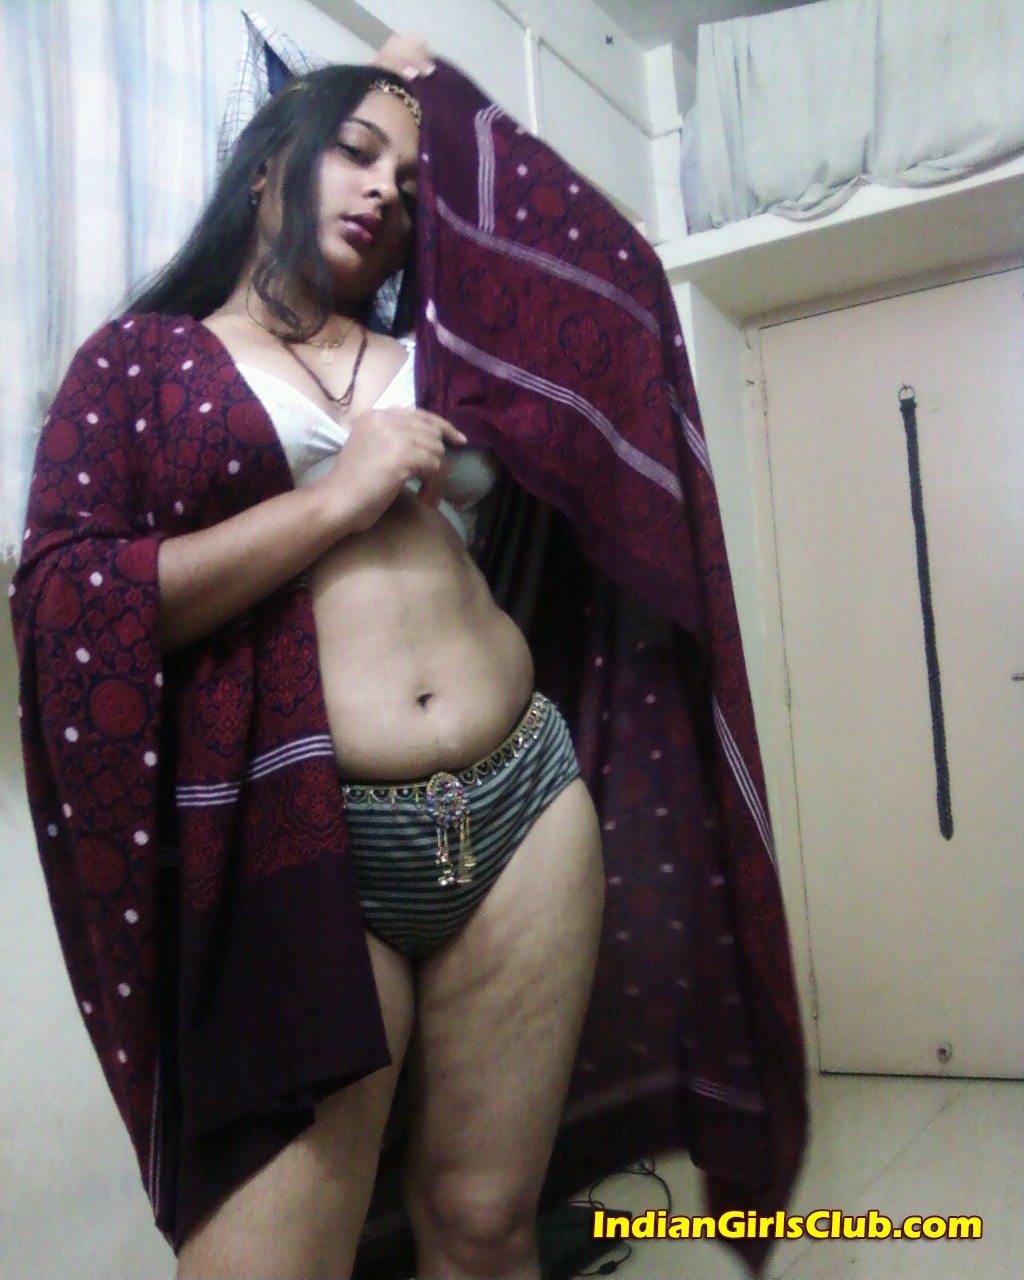 cute indian girl nude p1 - Indian Girls Club pic